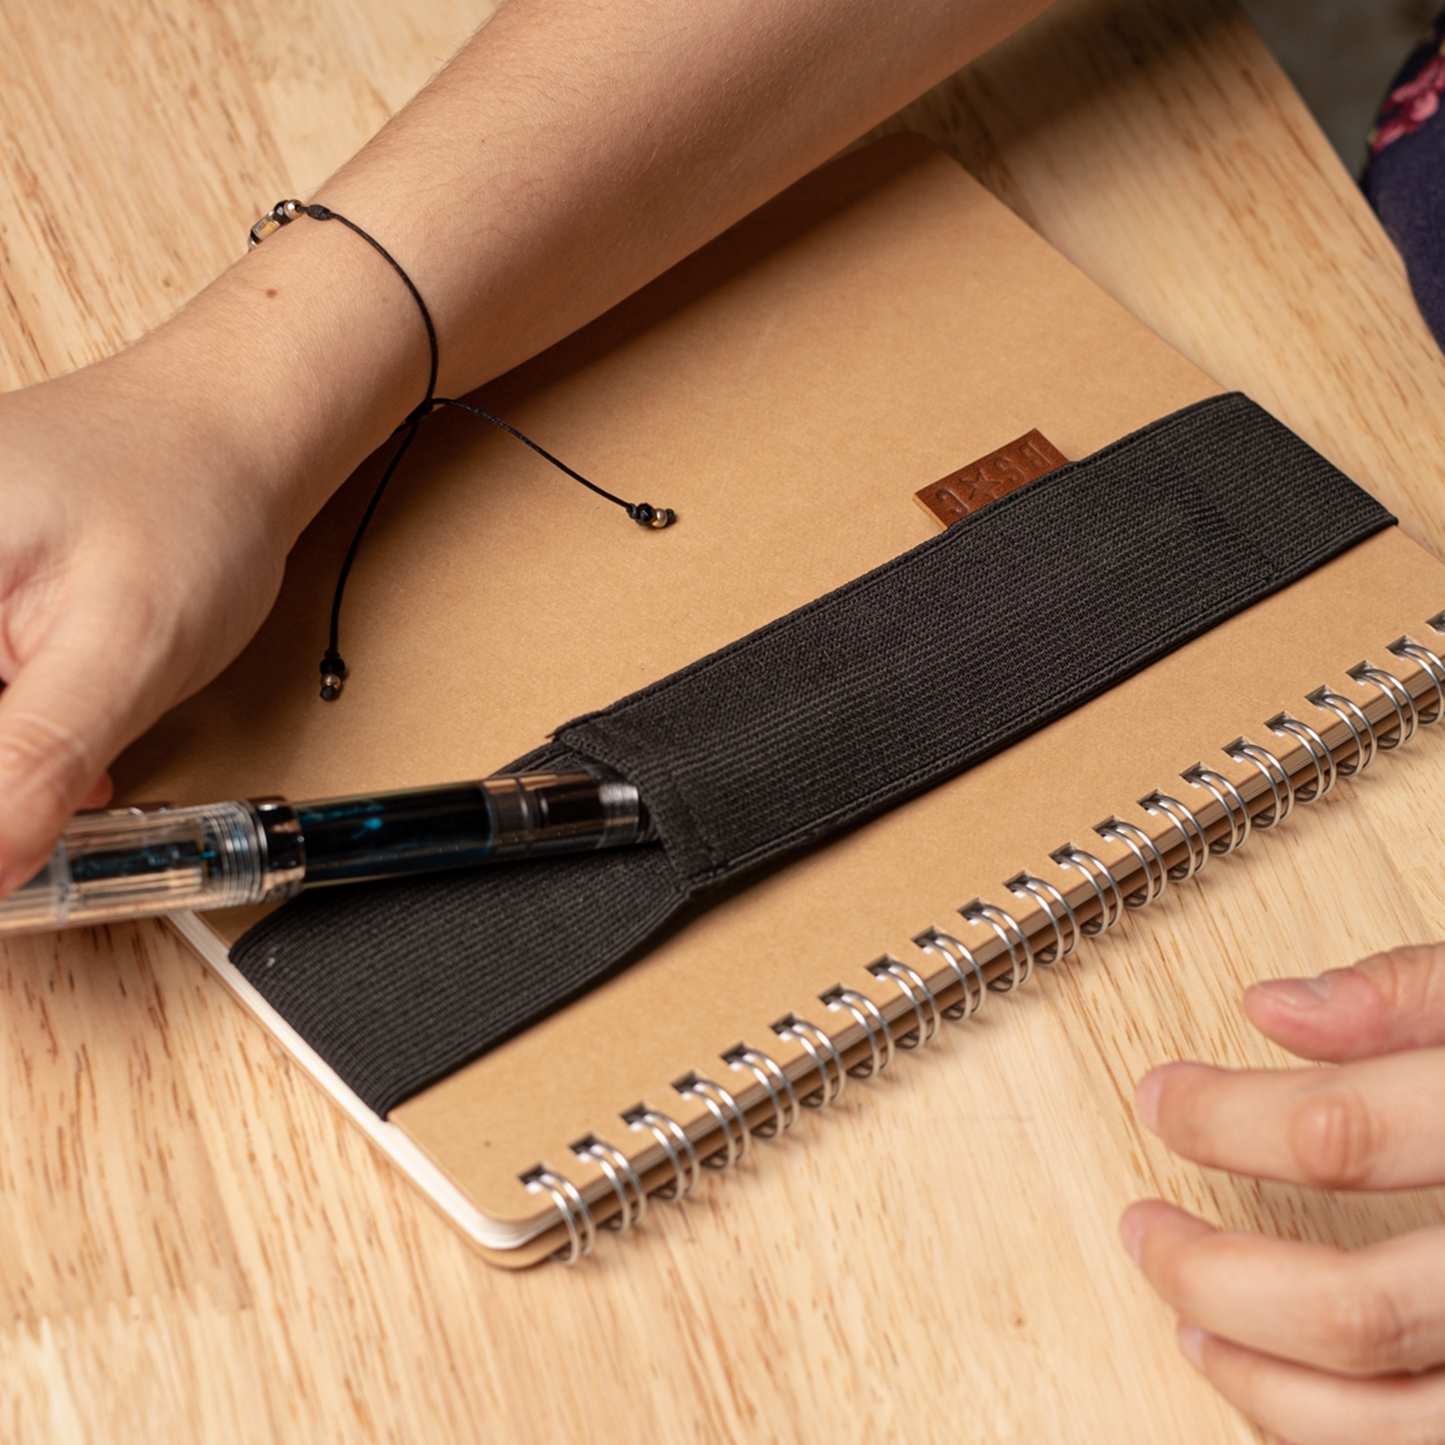 Elastic Pencil/Pen Holder for A5 notebooks, iPad mini, etc.